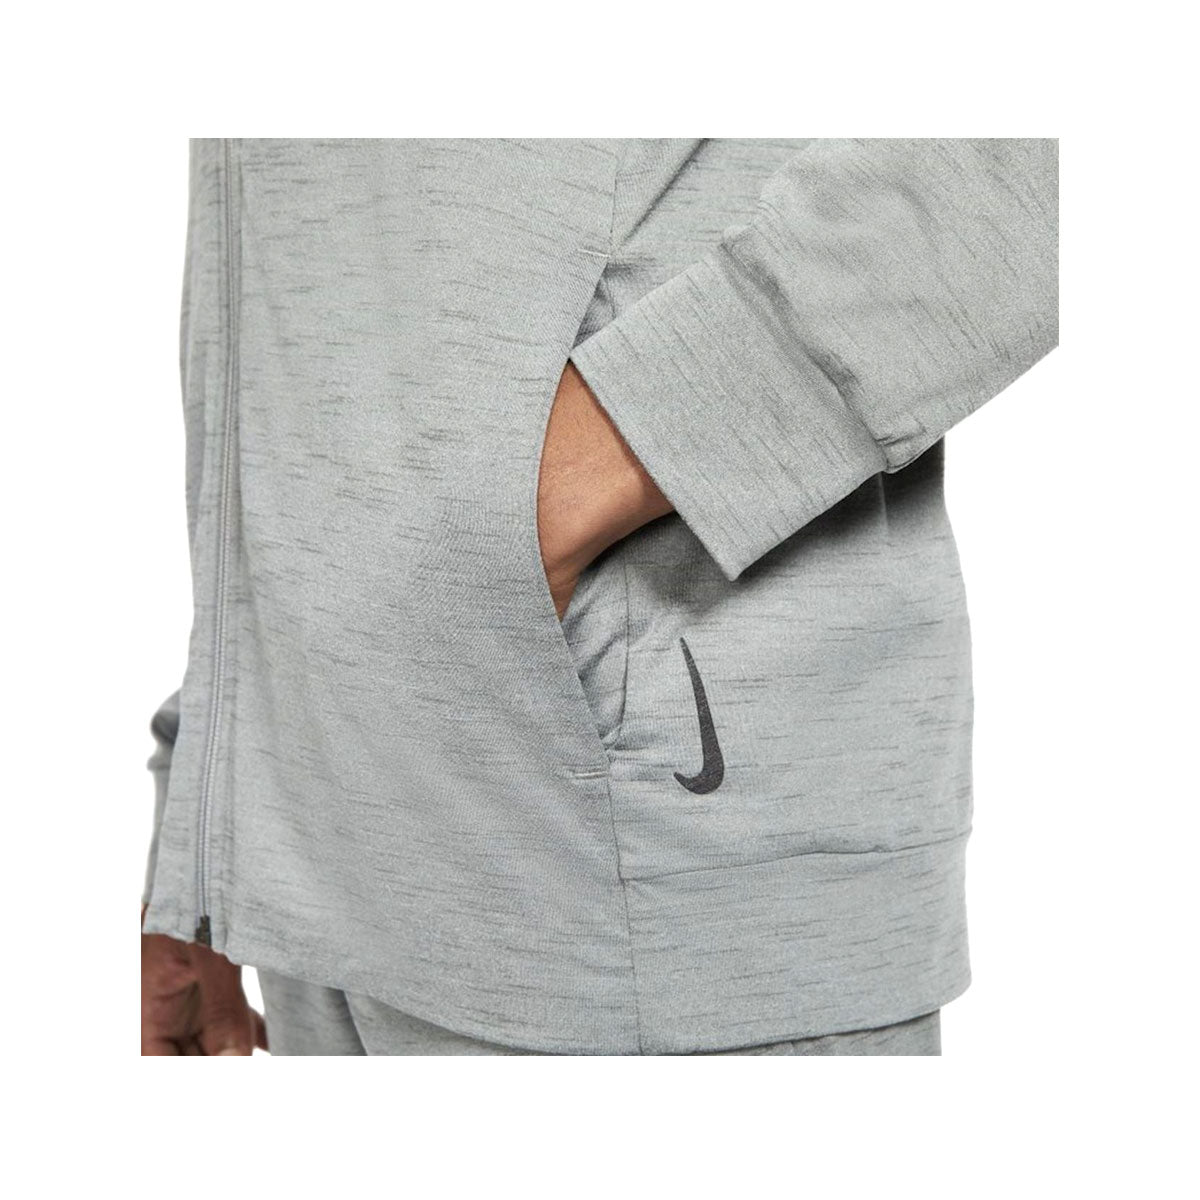 Nike Men's Yoga Dri-FIT Full-Zip Jacket